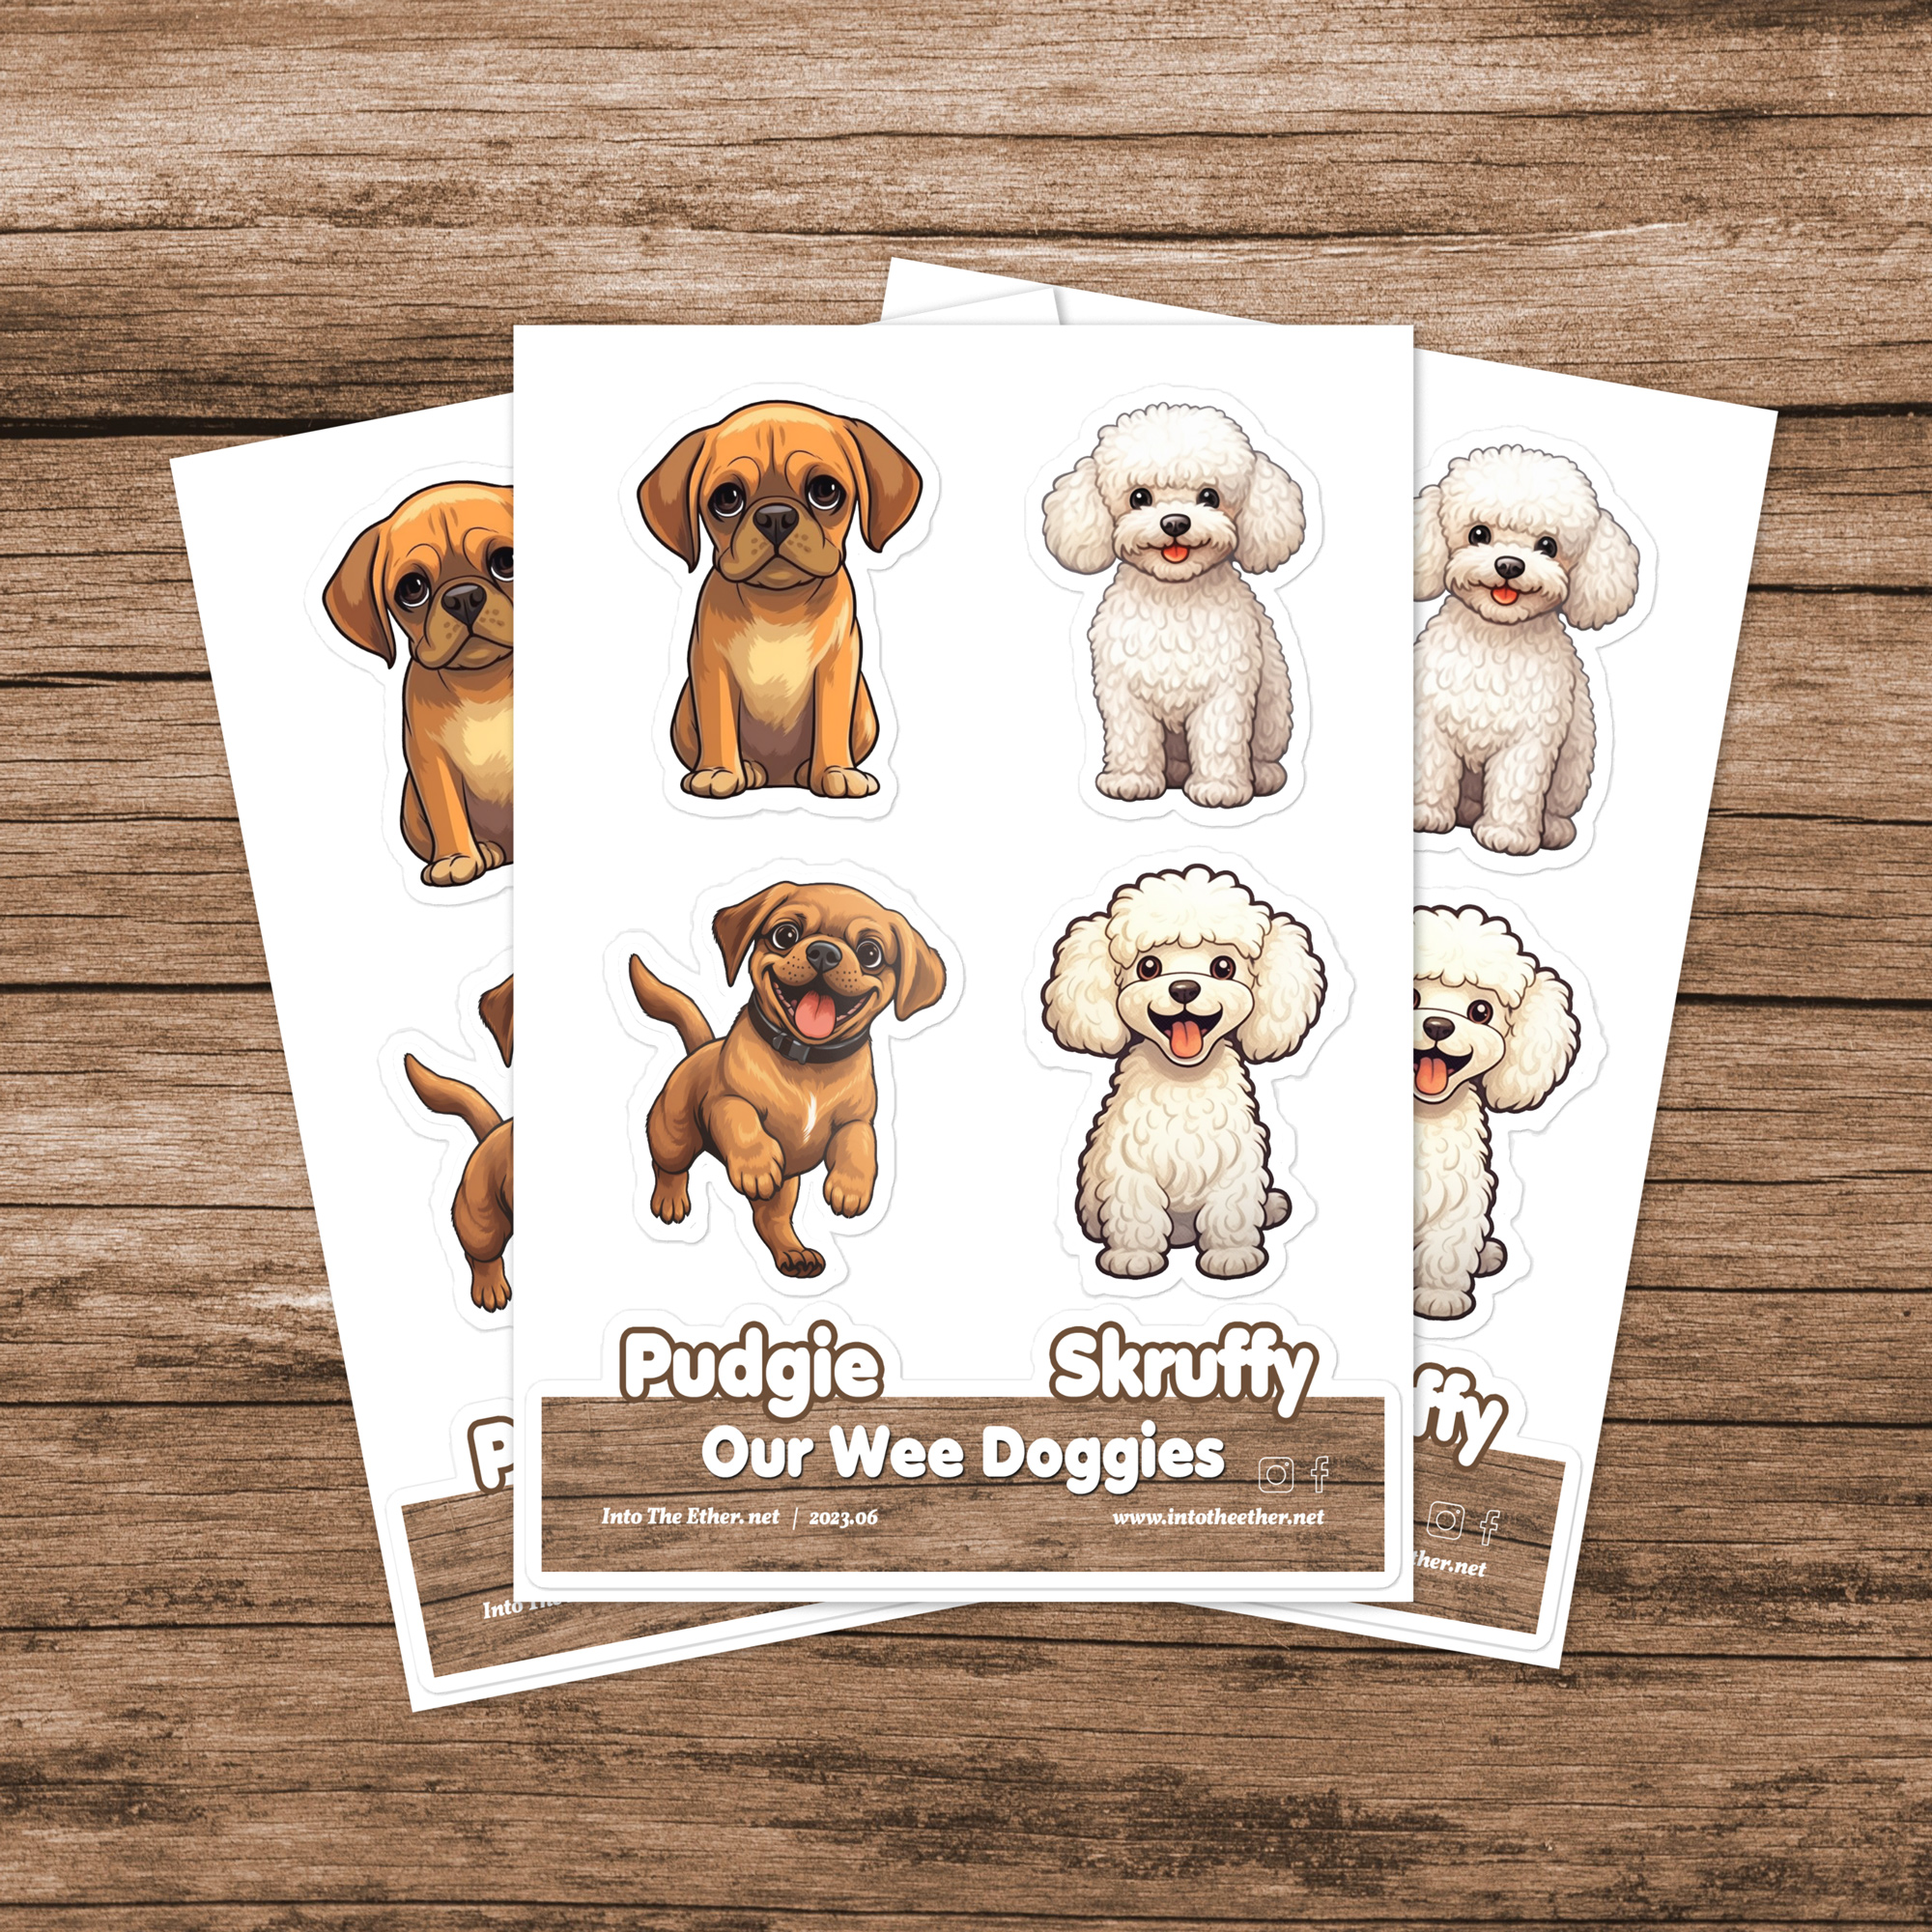 Our Wee Doggies - Pudgie & Skruffy - Sticker Sheet